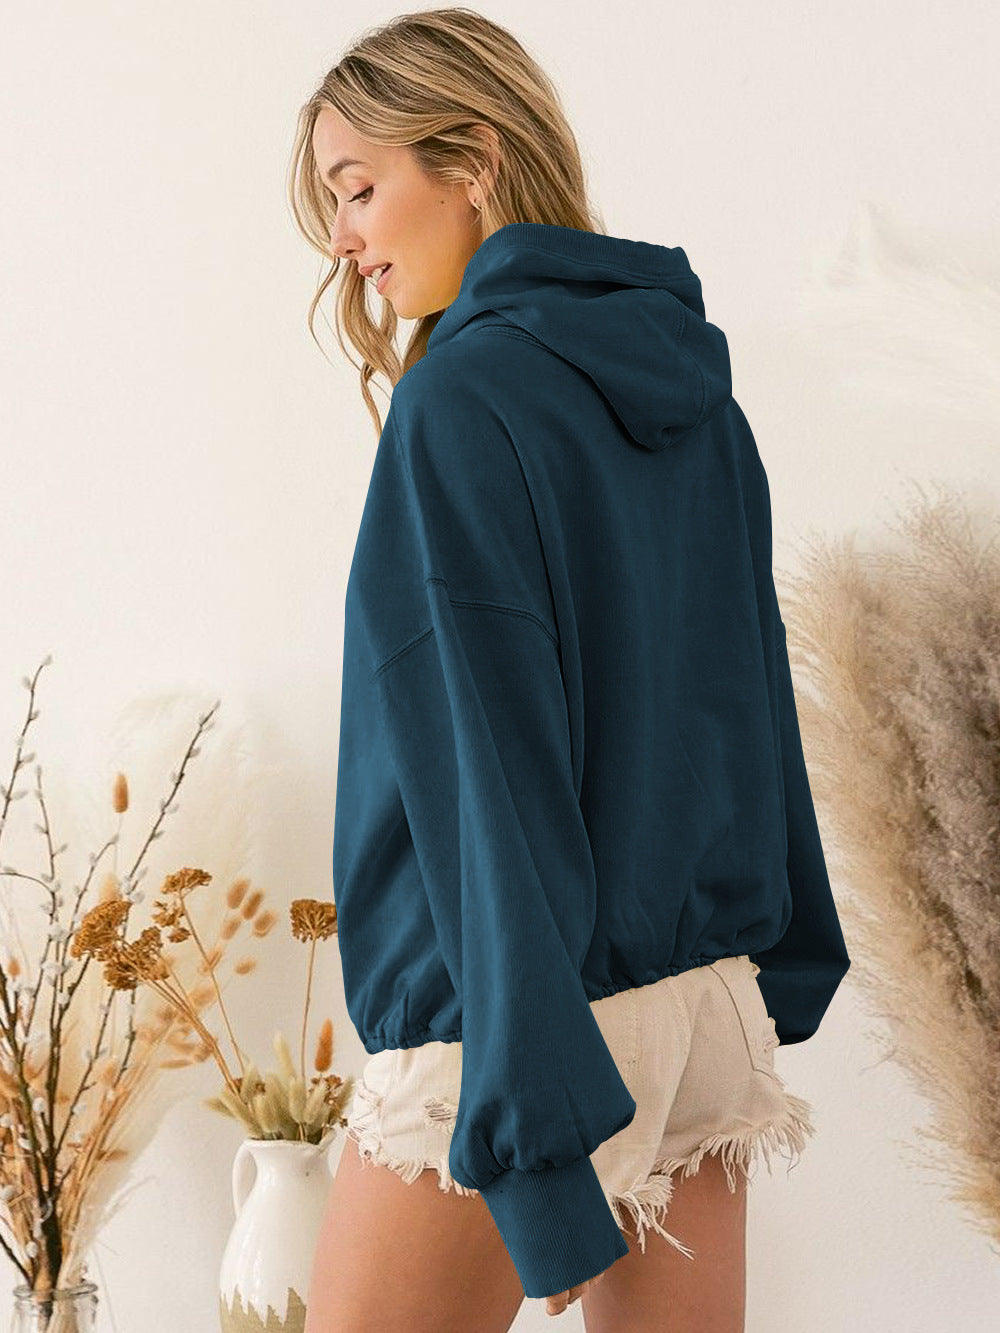 
                  
                    Hooded Sweater Women Clothing Tide Brand Sports Hoodie Zipper Drawstring Long Sleeve Top
                  
                